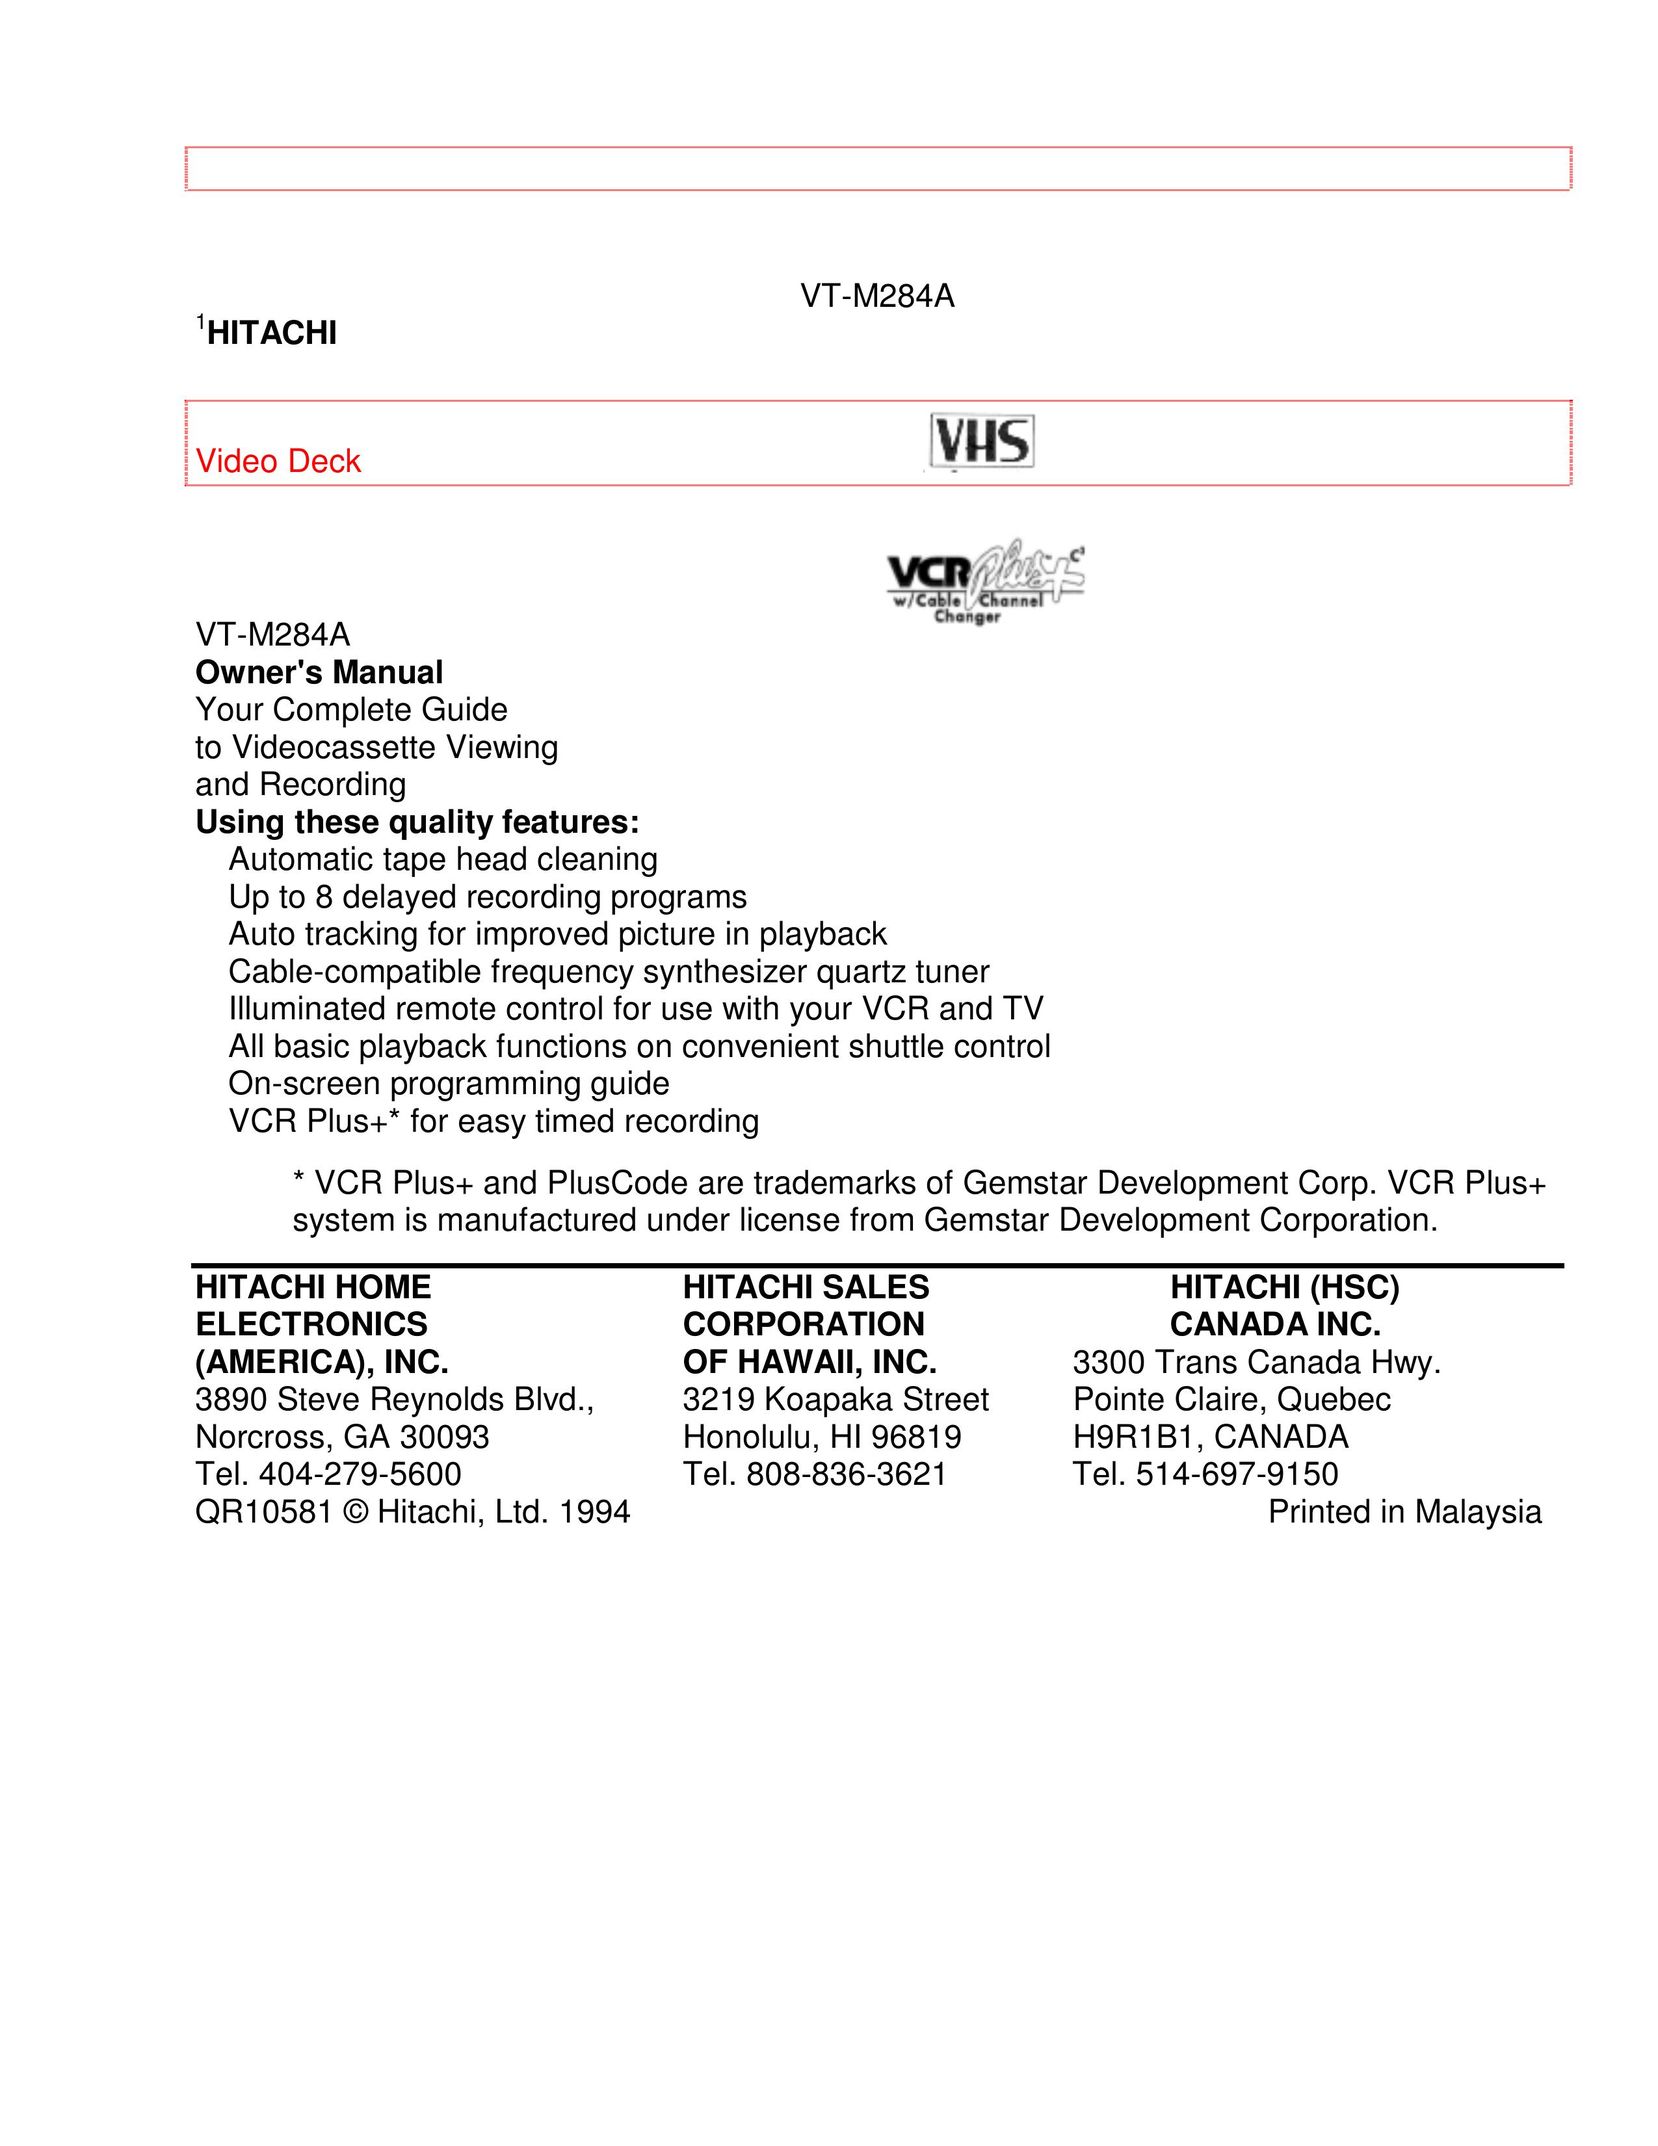 Hitachi VT-M284A Portable DVD Player User Manual